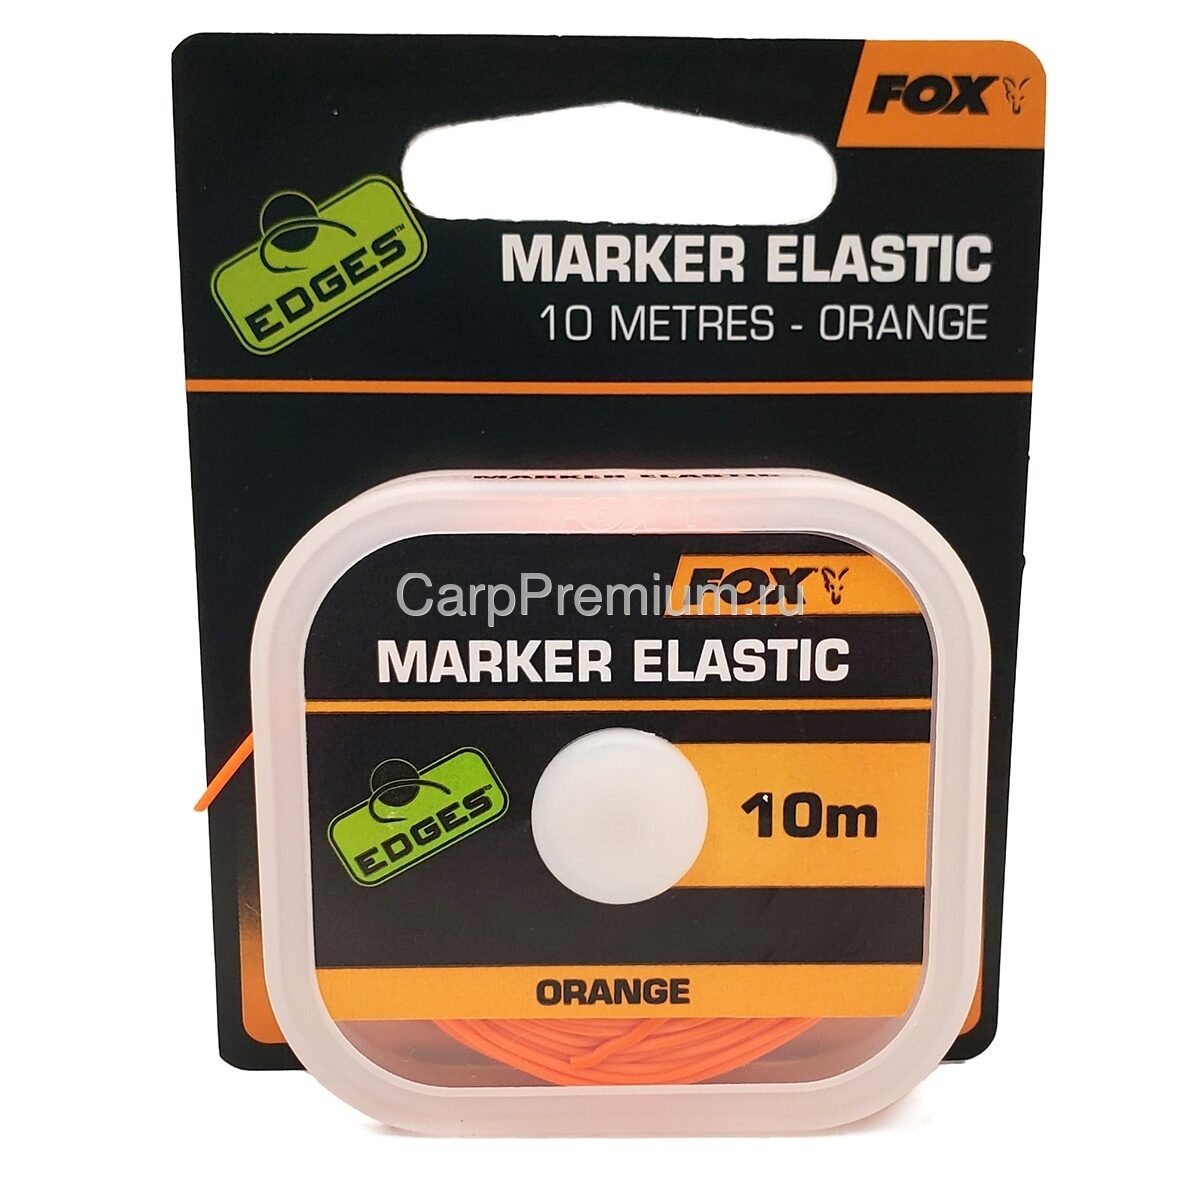 Эластичная маркерная резина Оранжевая Fox (Фокс) - EDGES Marker Elastic Orange, 10 м